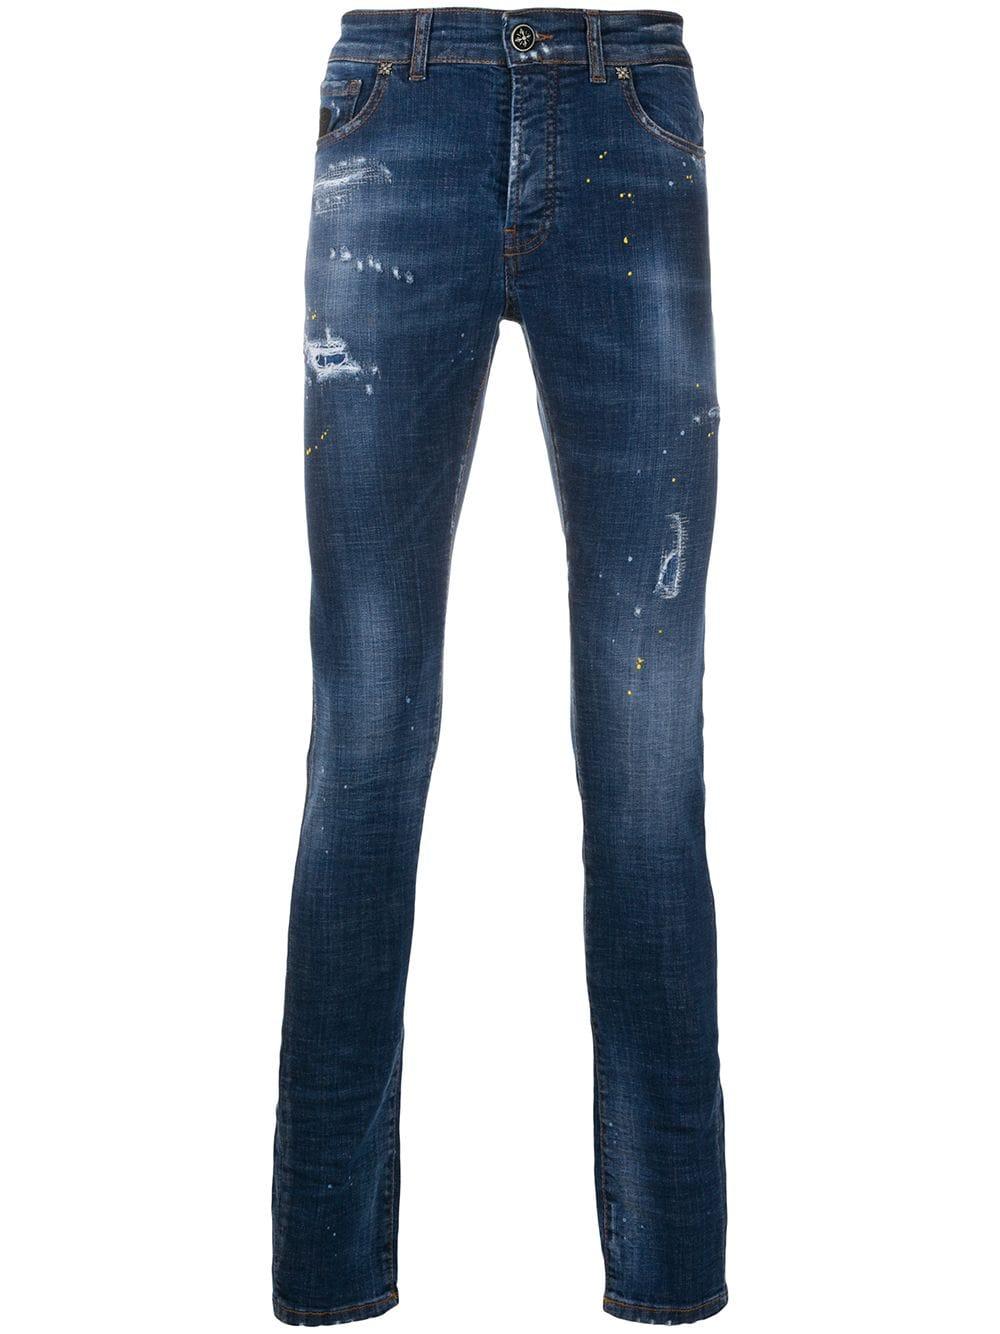 John Richmond Denim Skinny Jeans in Blue for Men - Lyst